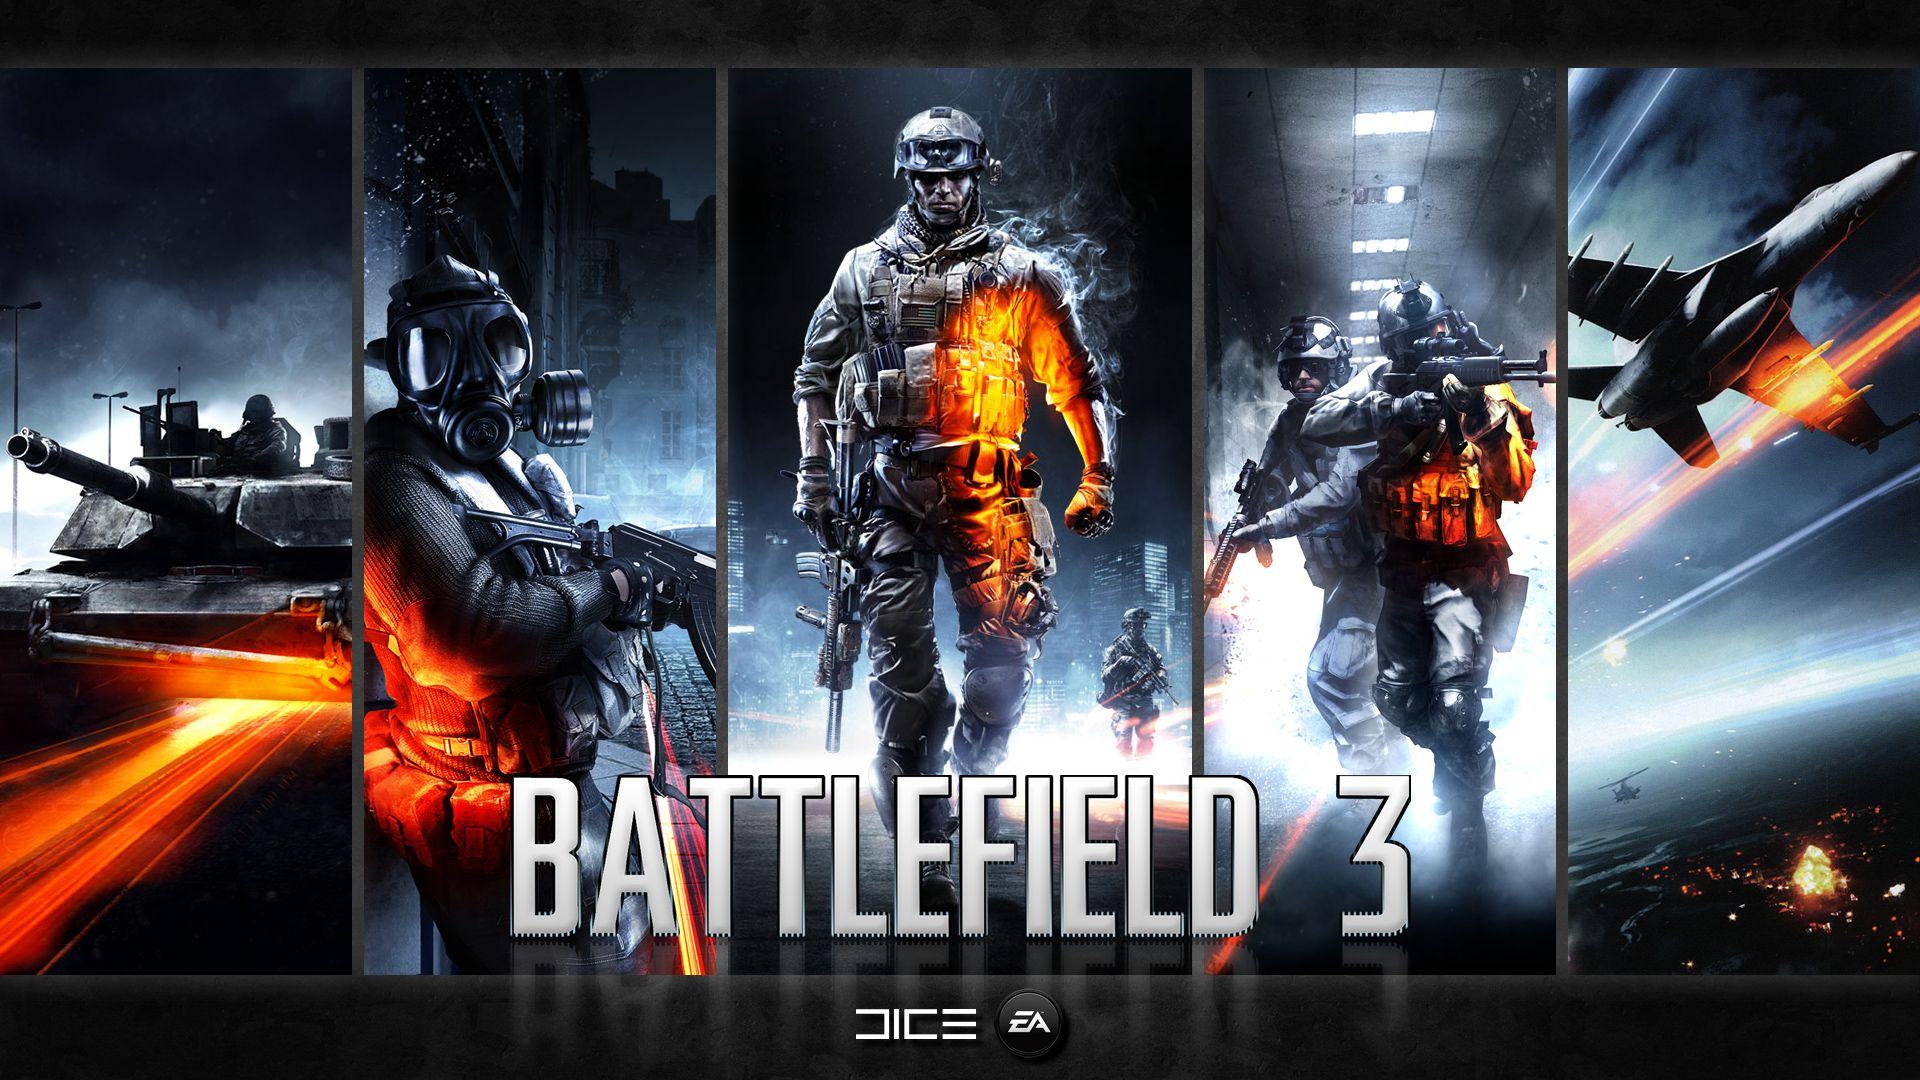 Battlefield 3 PC Wallpaper